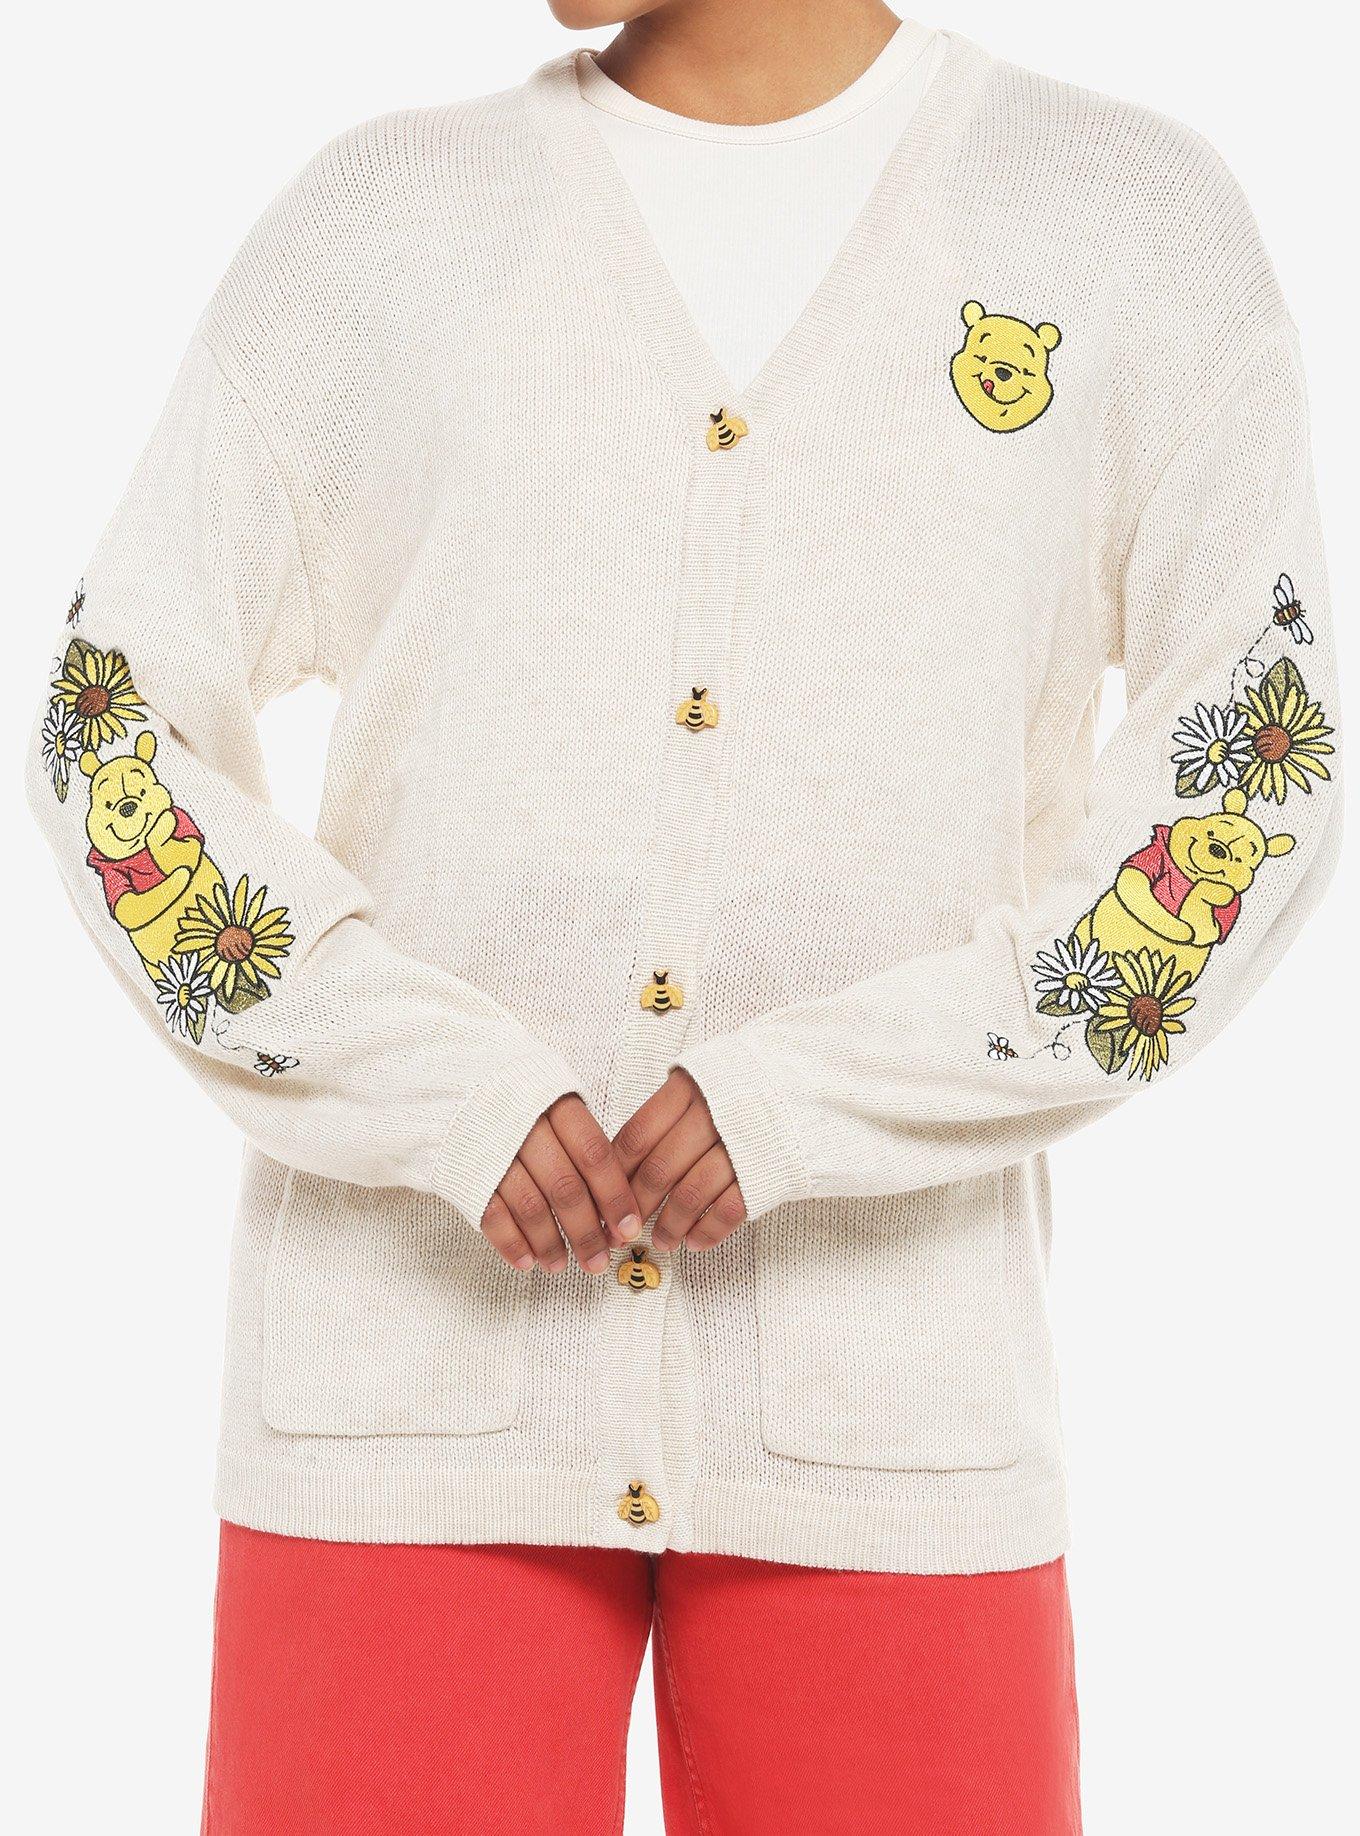 Hot Topic Disney Winnie The Pooh Gingham Girls Sweater Tank Top